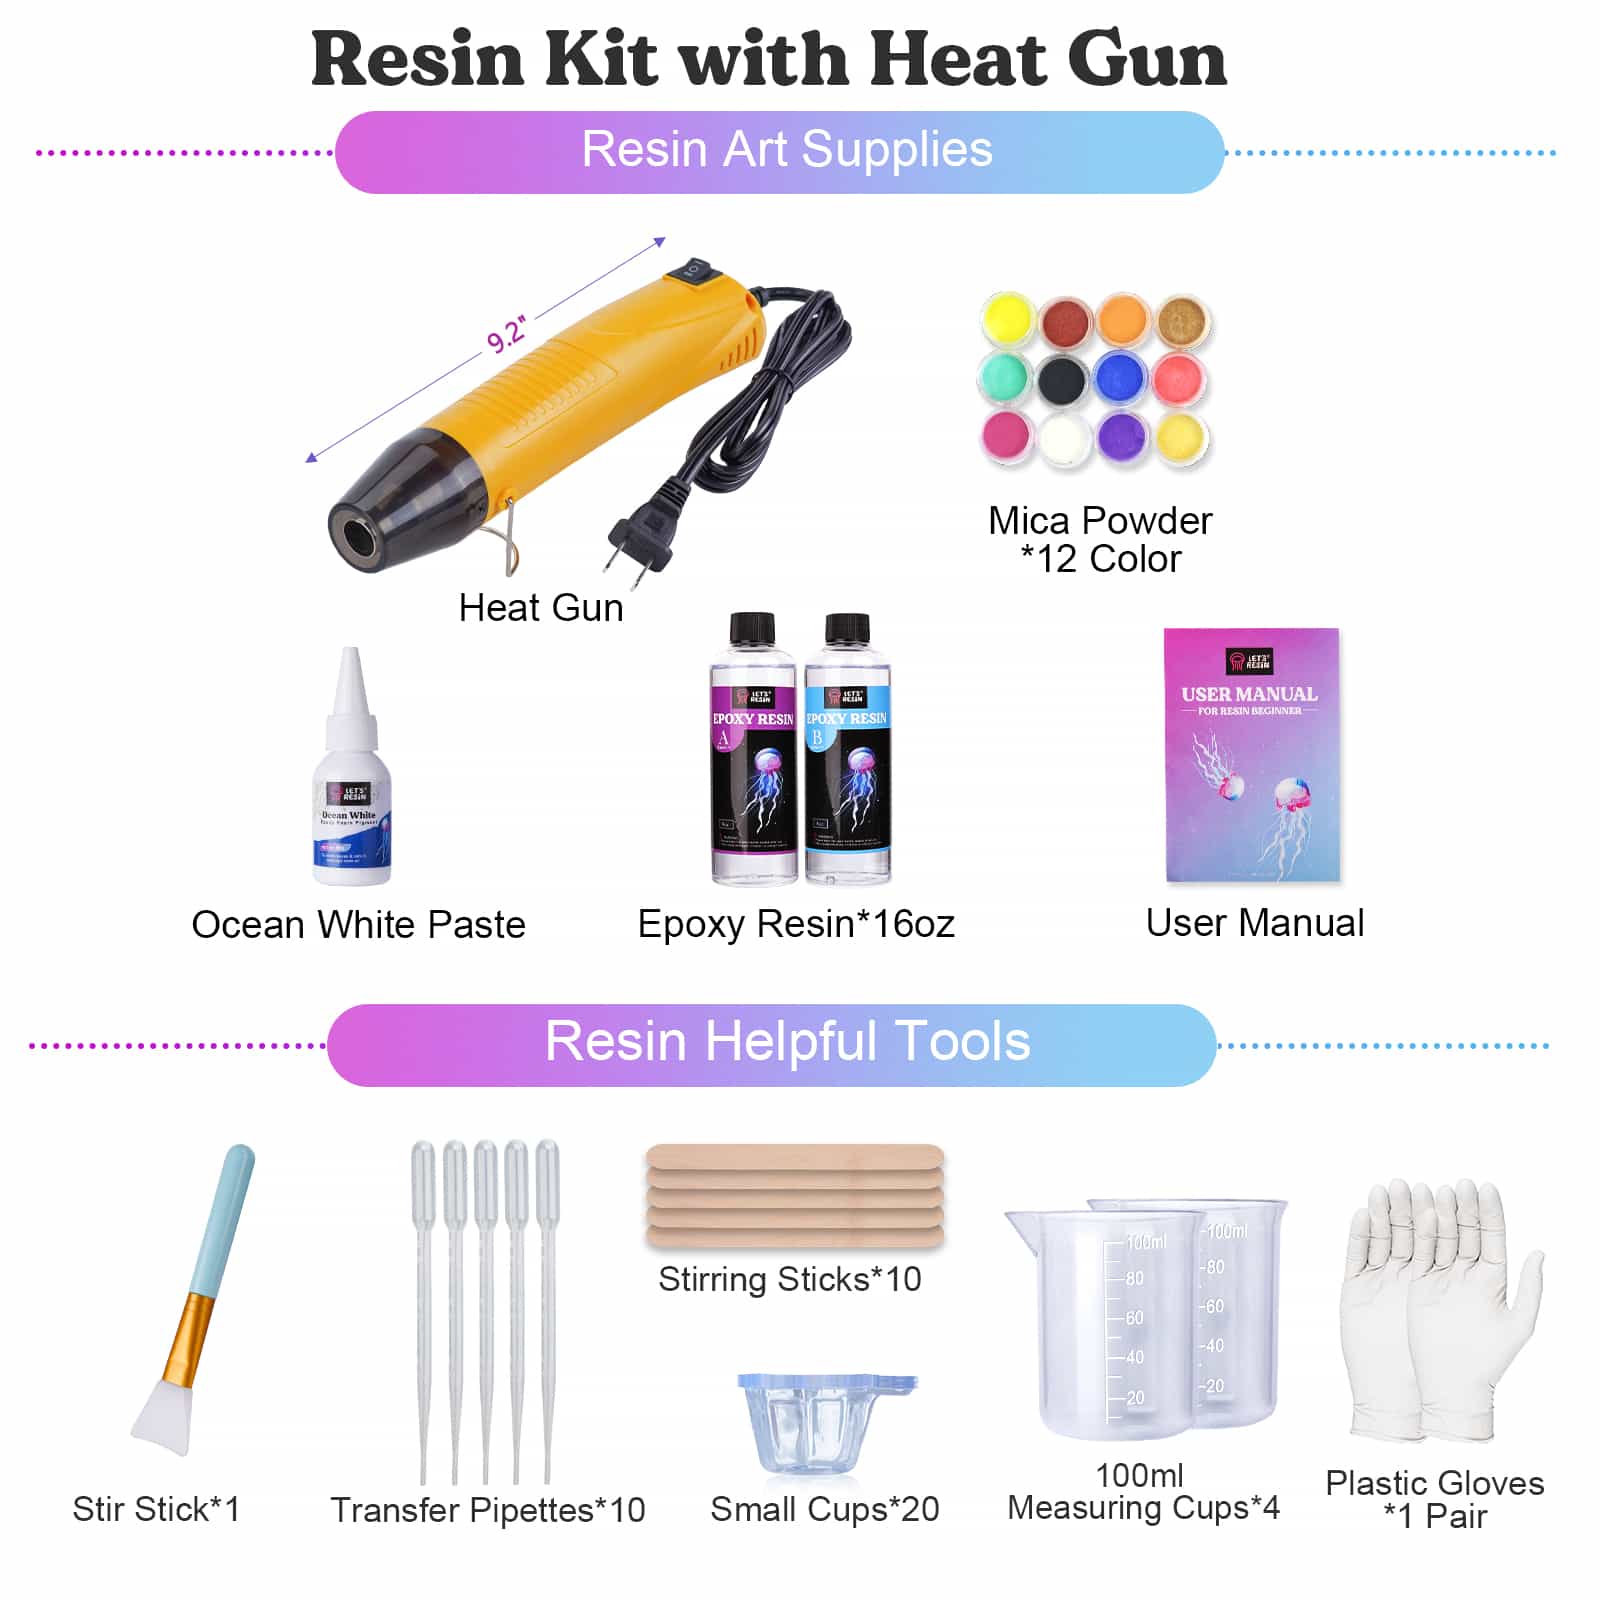 Heat Gun for Resin Art, Learn How to Use Heat Gun